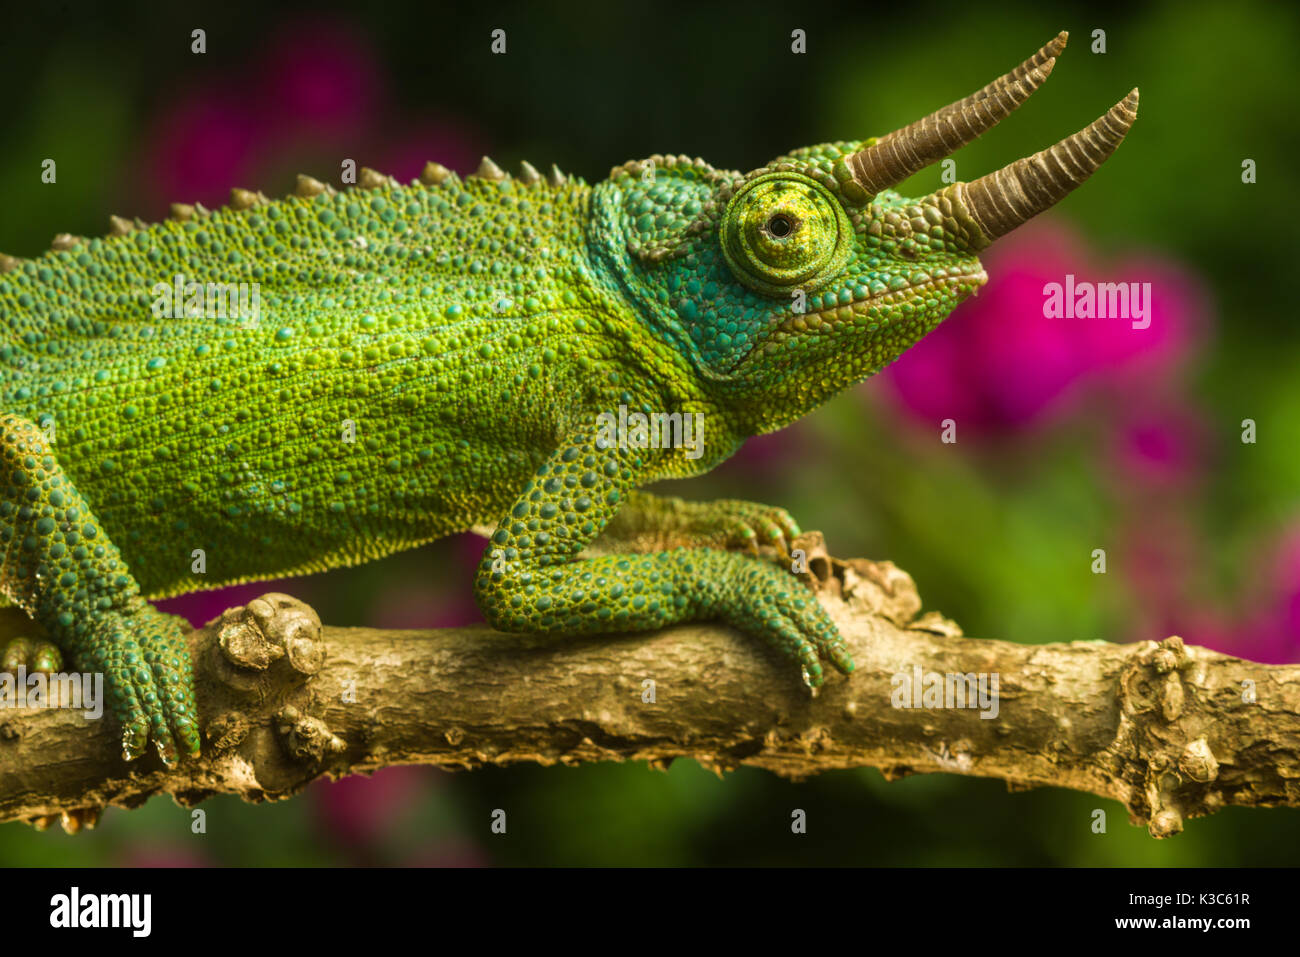 Adult male Jackson's chameleon (Trioceros jacksonii jacksonii) resting on branch, Nairobi, Kenya Stock Photo